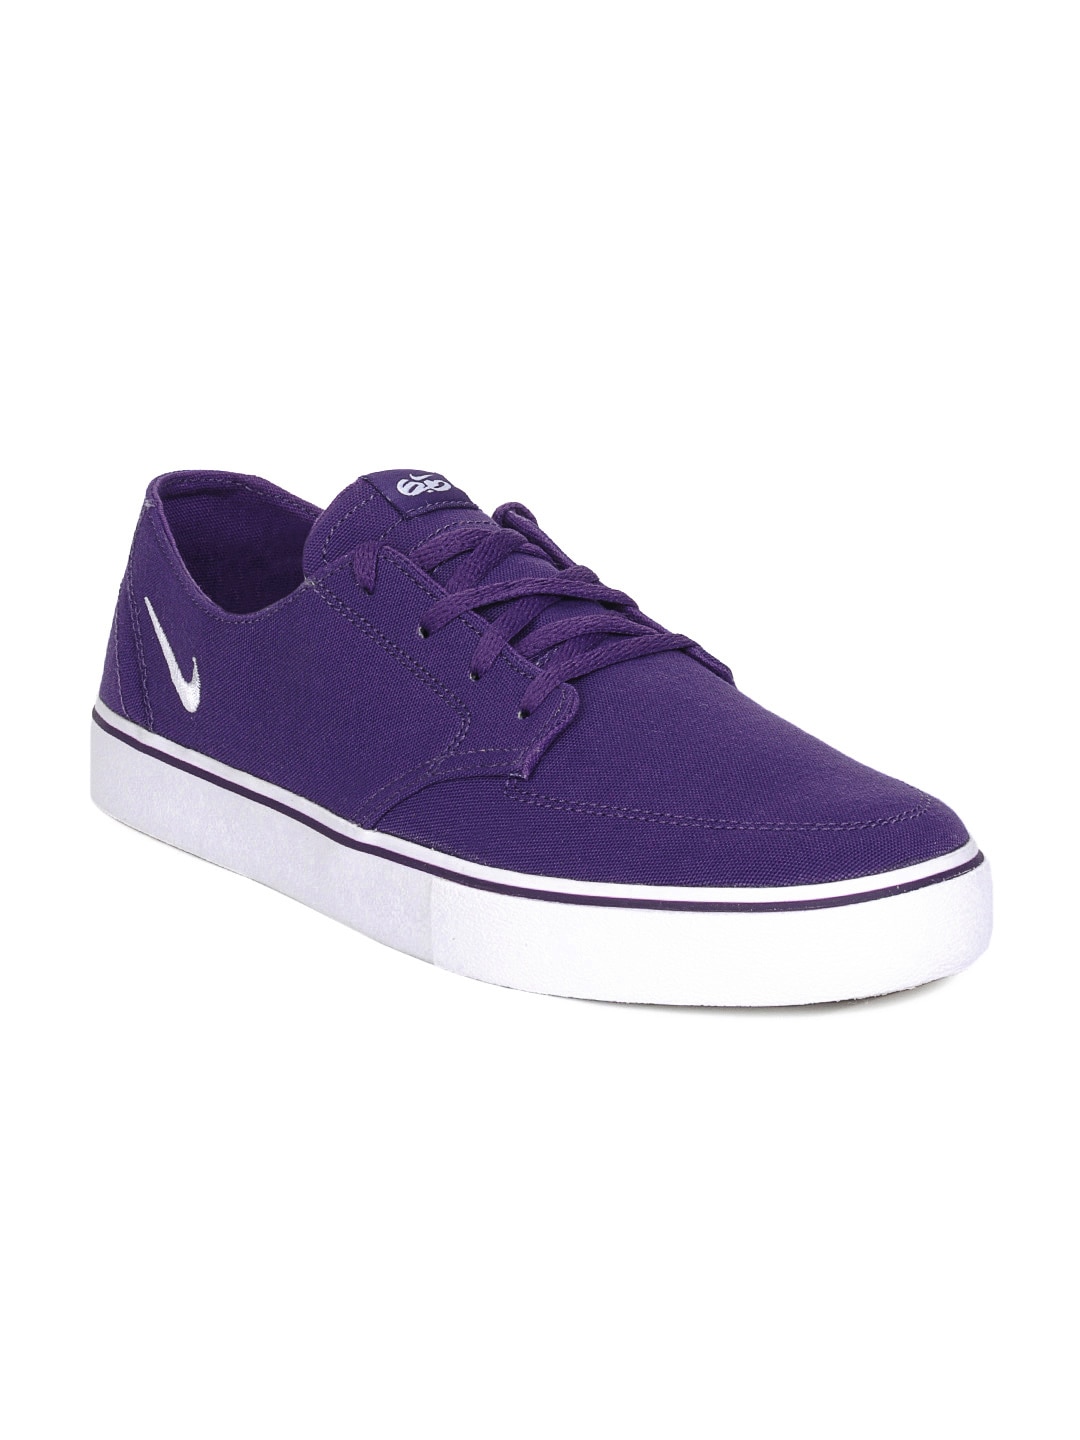 Nike Men Purple Braata Shoes